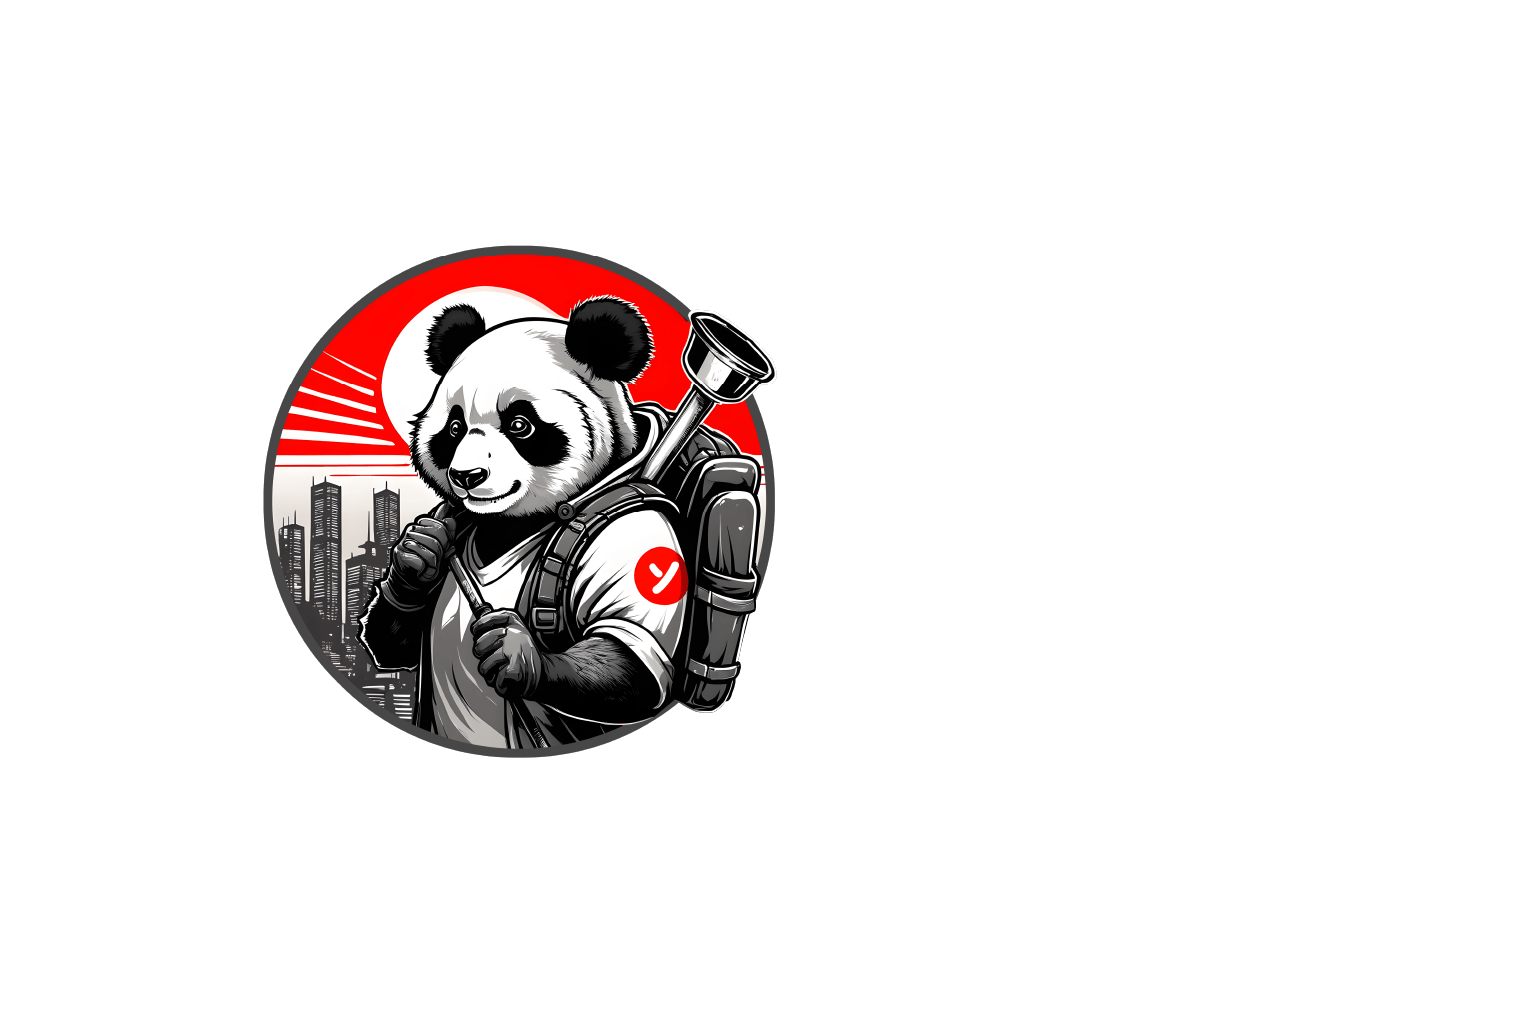 Yokoyama Desentupidora